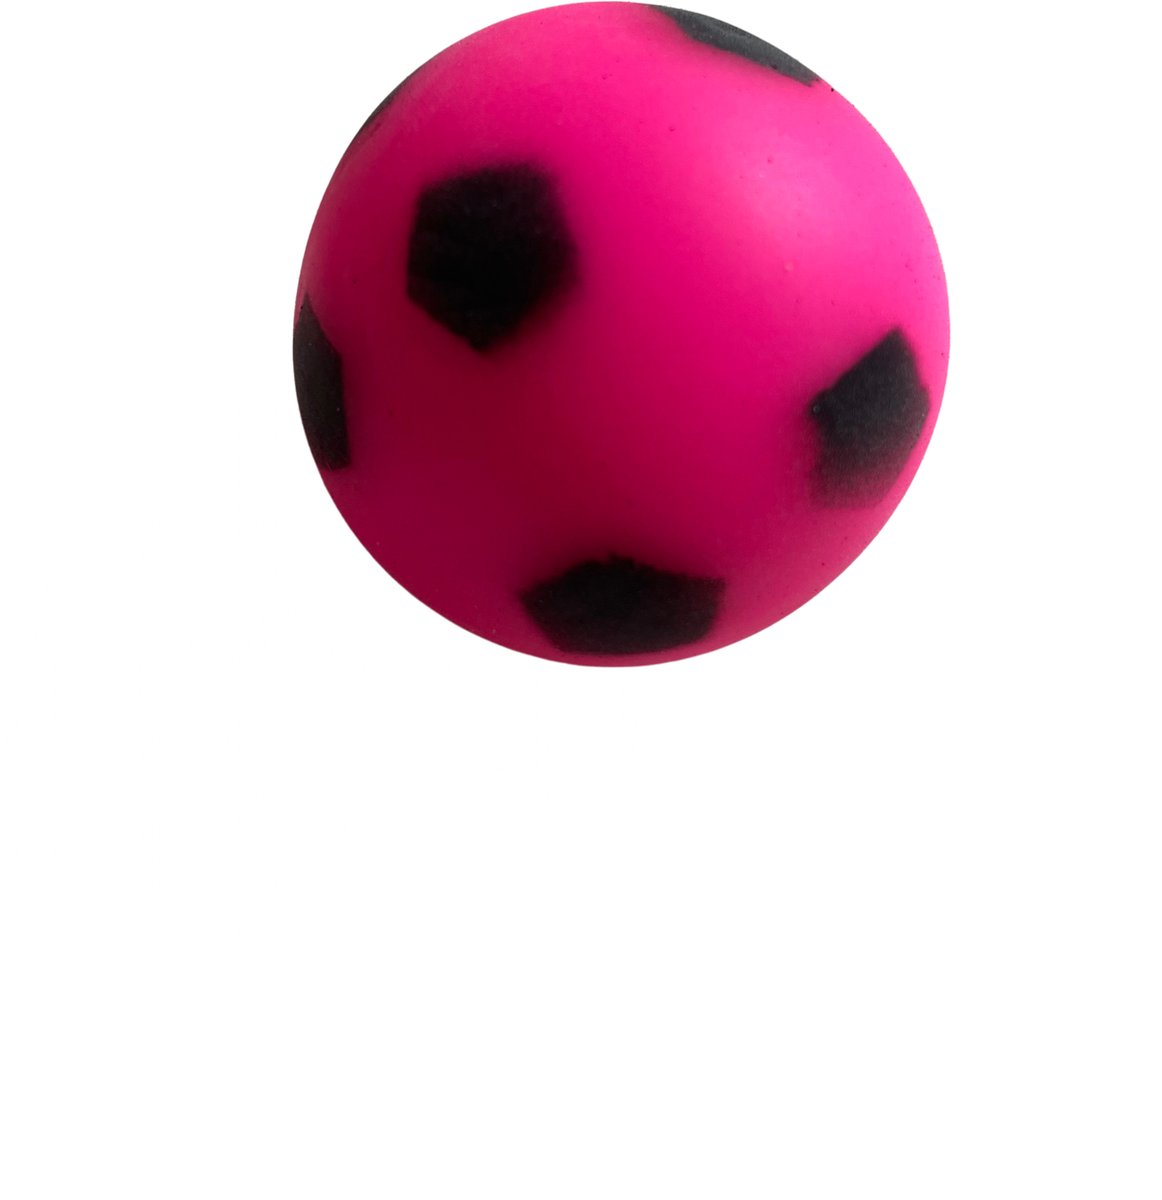 Premium Squishy Voetbal Knijpbal / Stressbal | Anti-Stress Speelgoed / Fidget Toy | Handtrainer - Roze